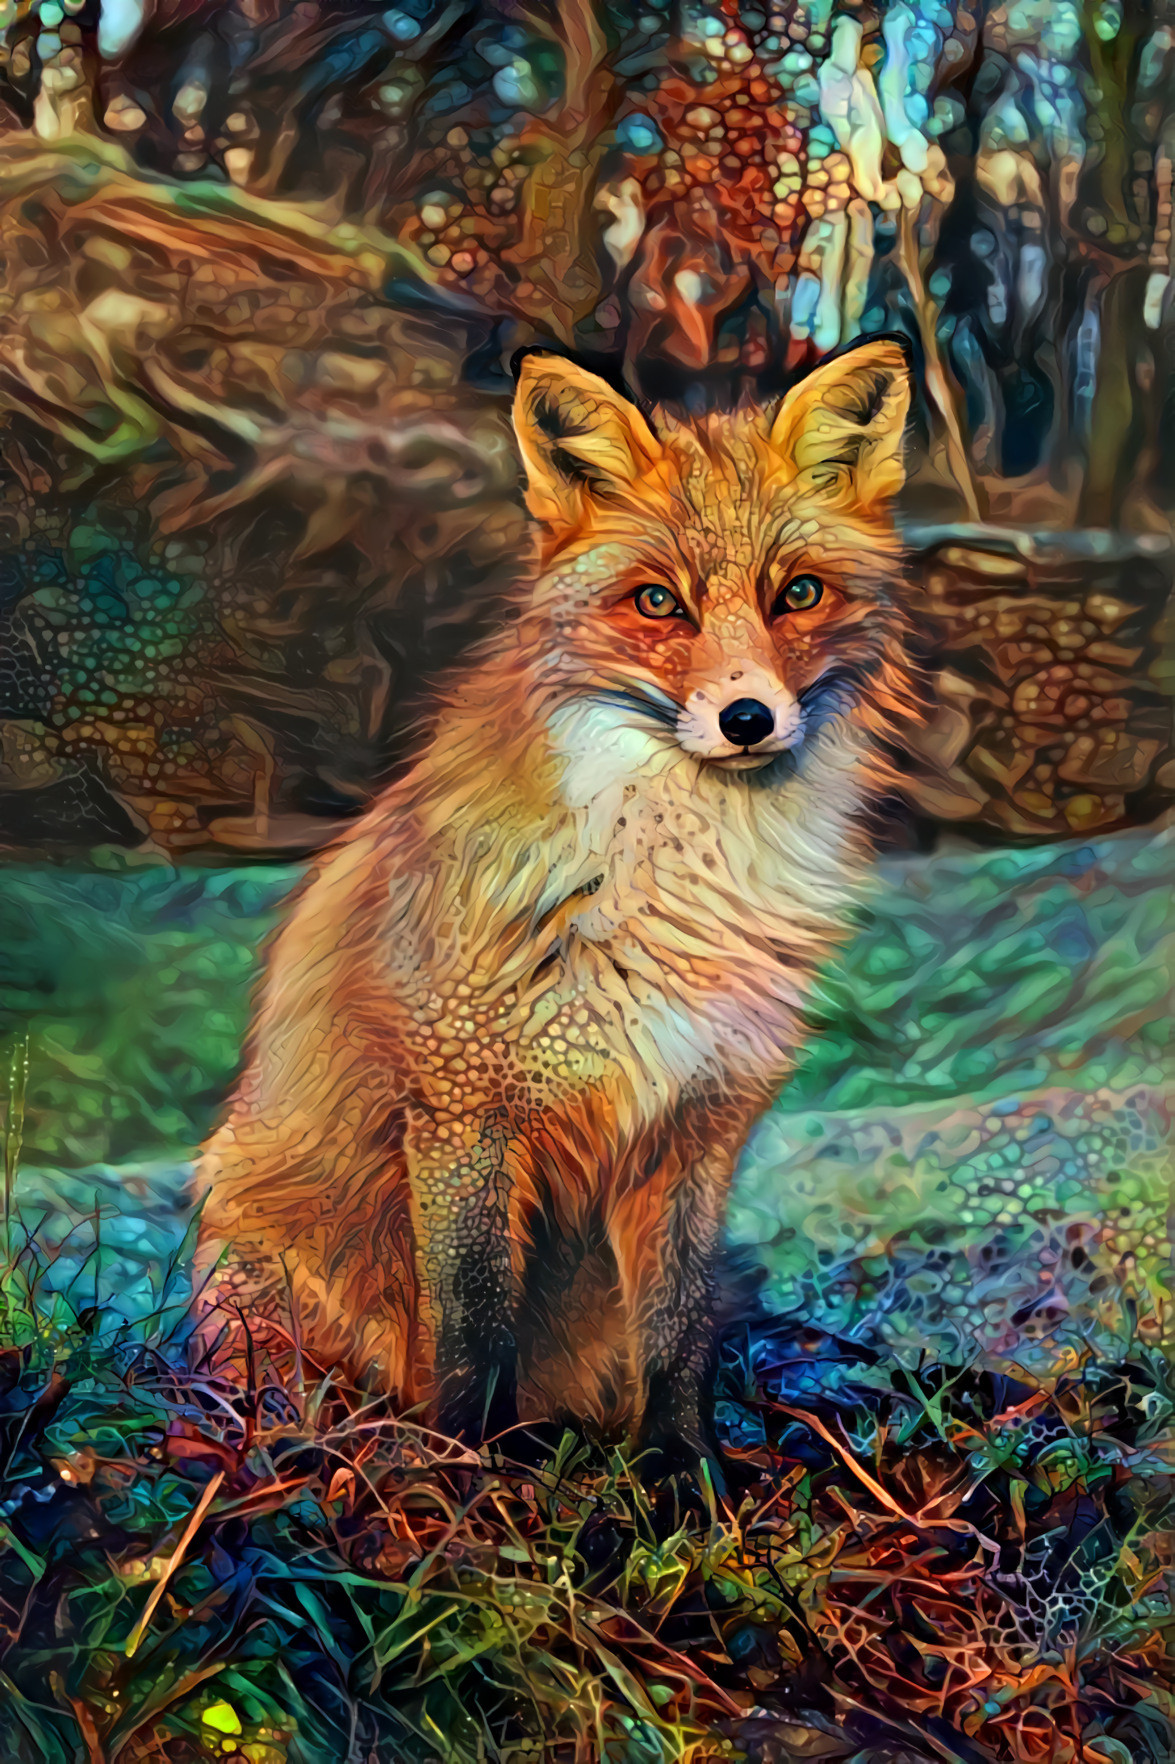 Red Fox. Original photo by Linnea Sandbakk on Unsplash.